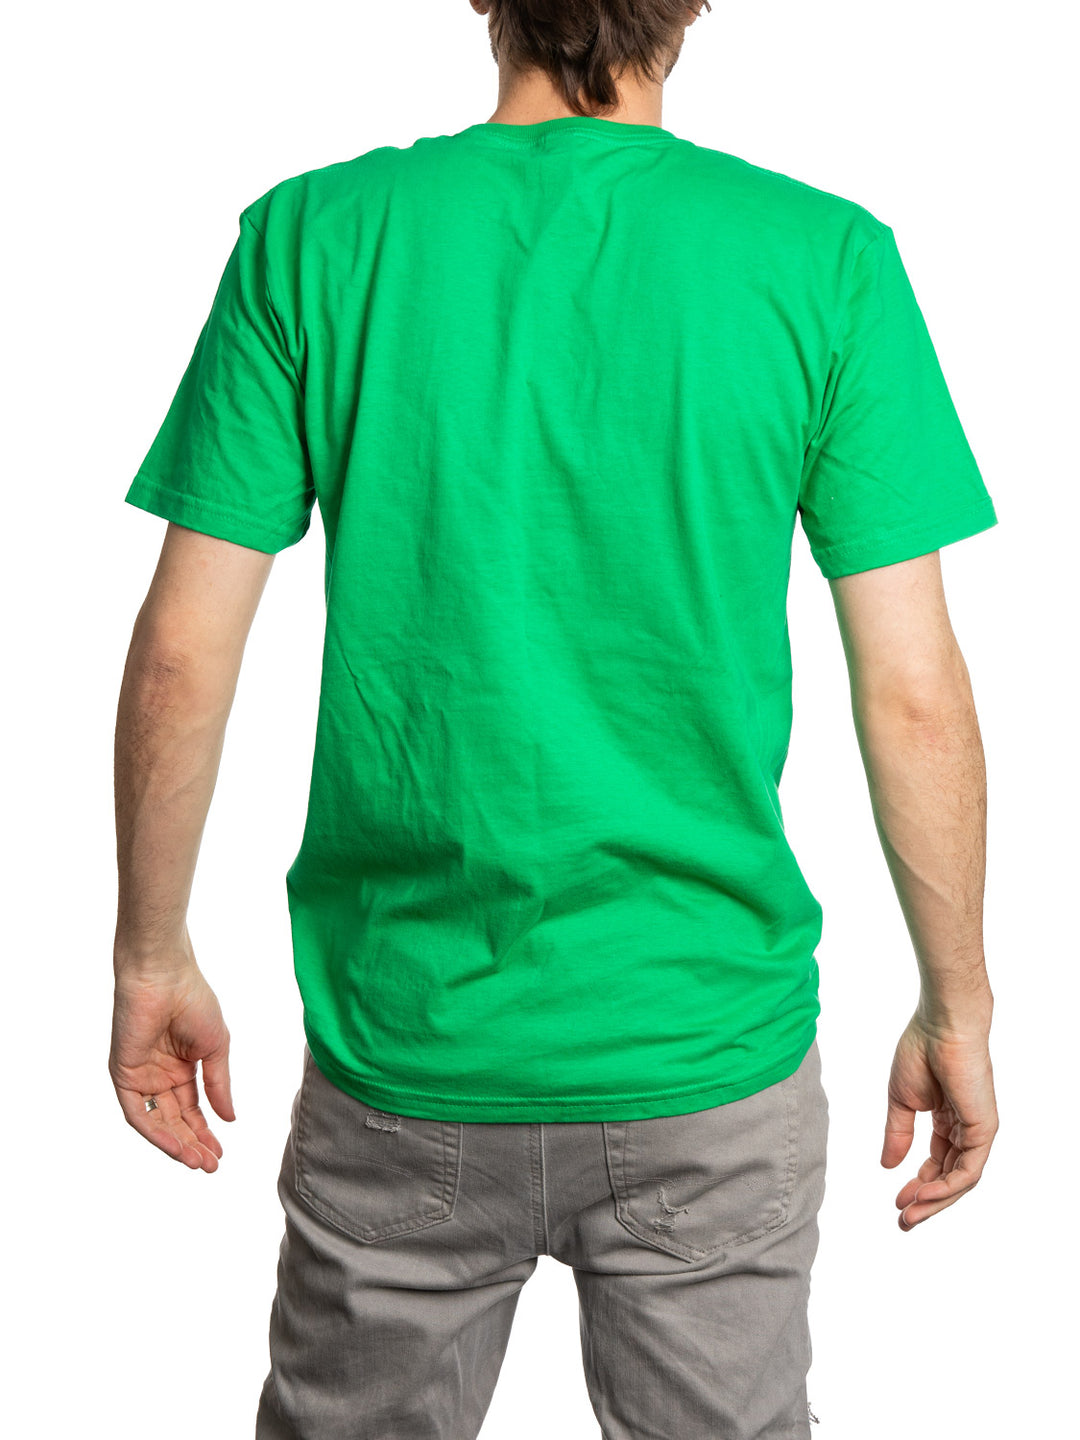 "Happy St. Patrick's Day" T-Shirt - Unisex St. Patrick's Day Shirt